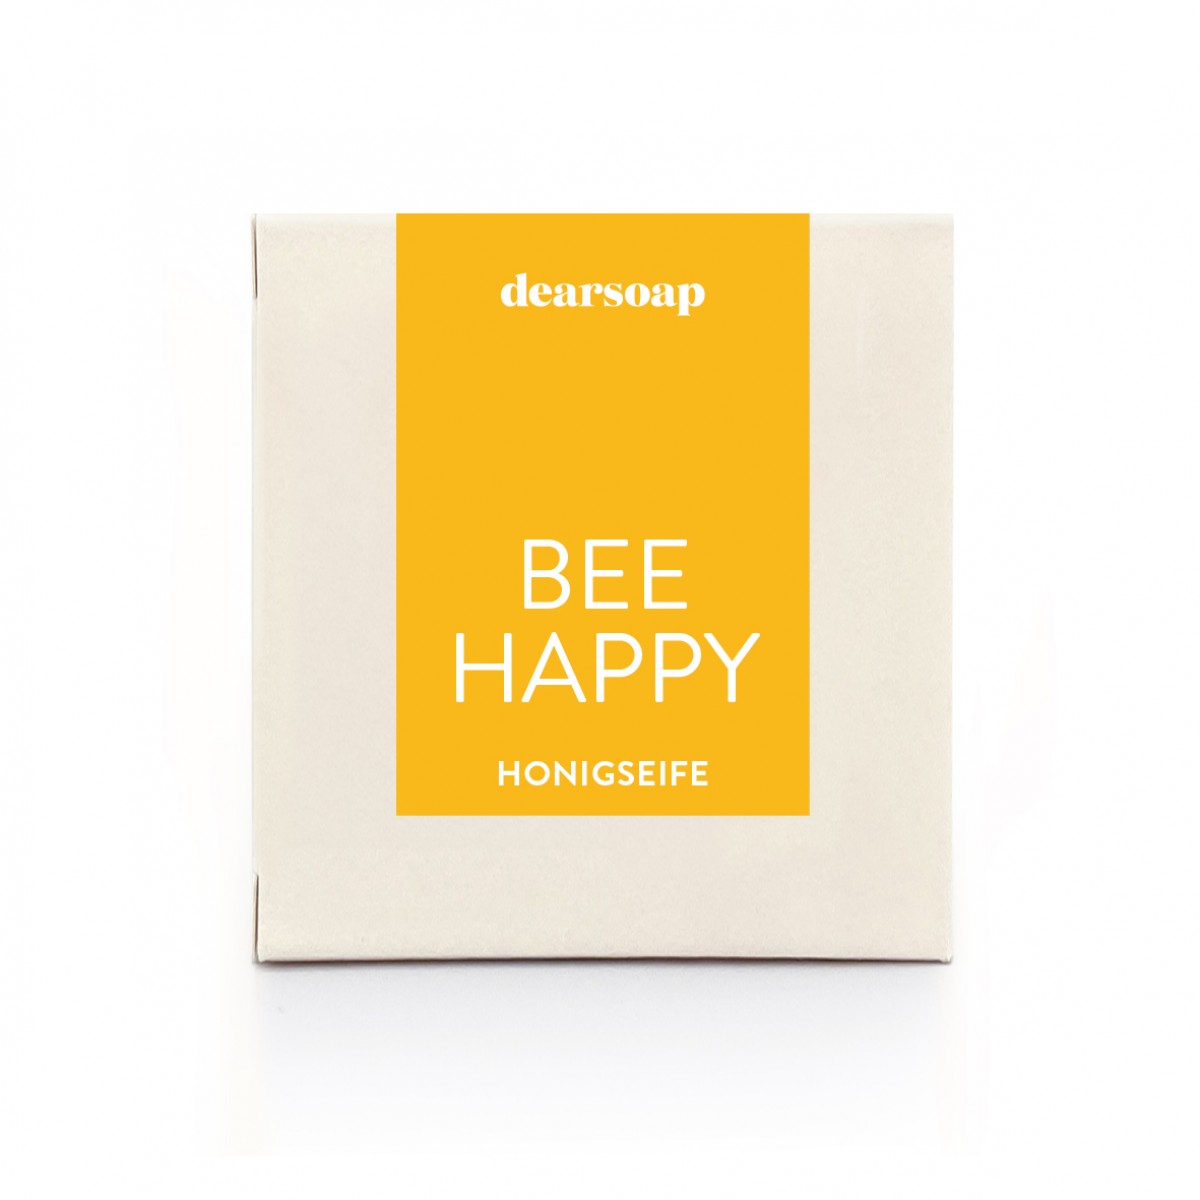 dearsoap BEE HAPPY Honigseife